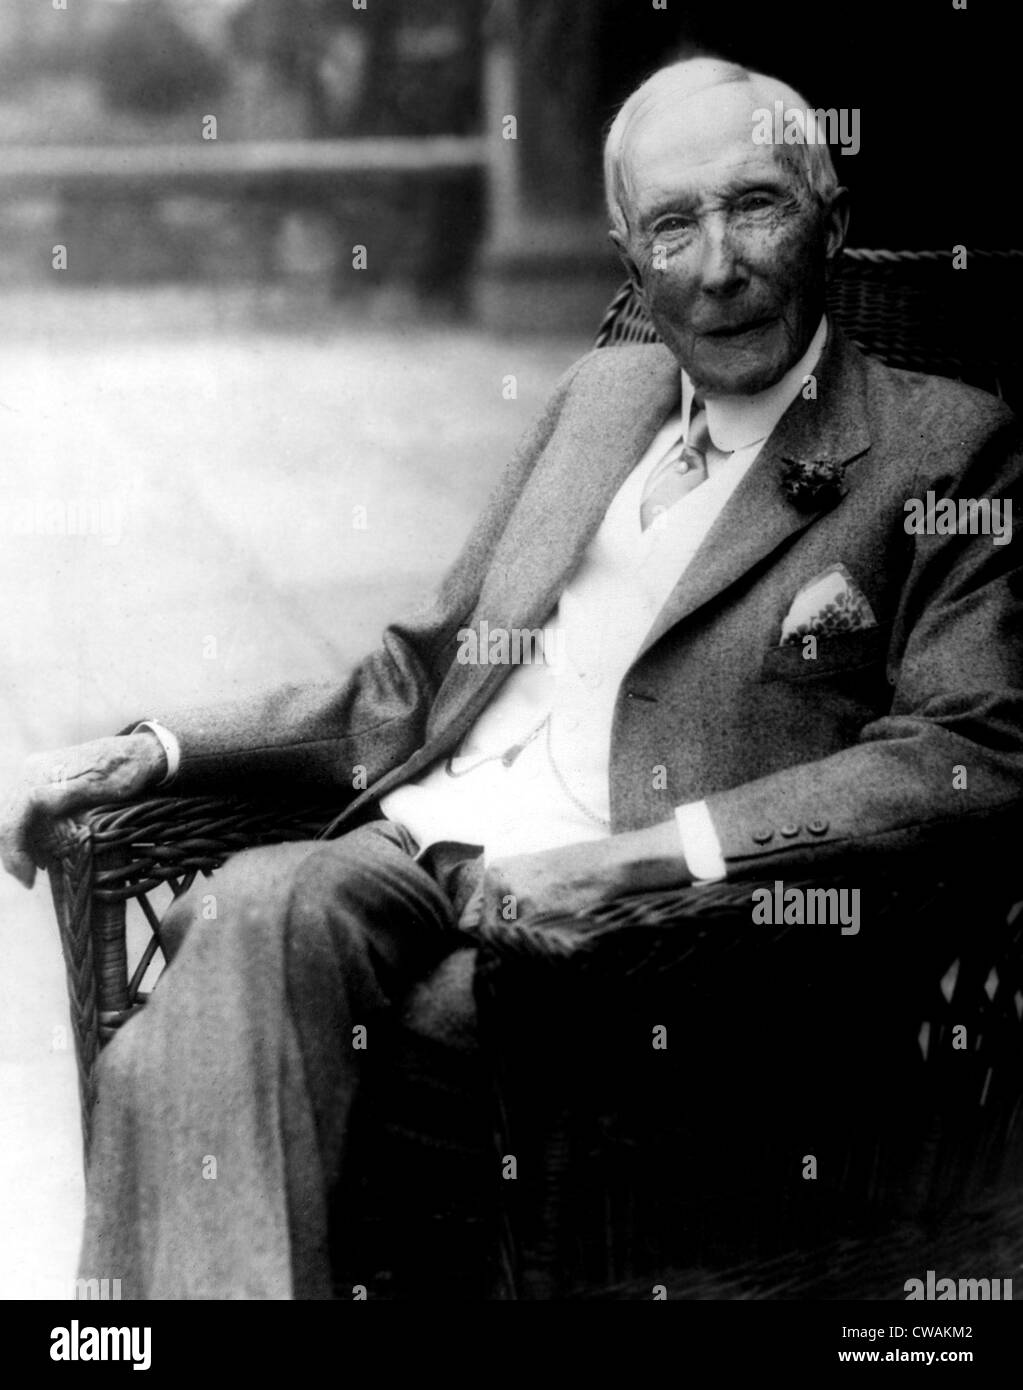 Rockefeller, John D. Sr., 91st birthday. Courtesy: CSU Archives / Everett Collection Stock Photo